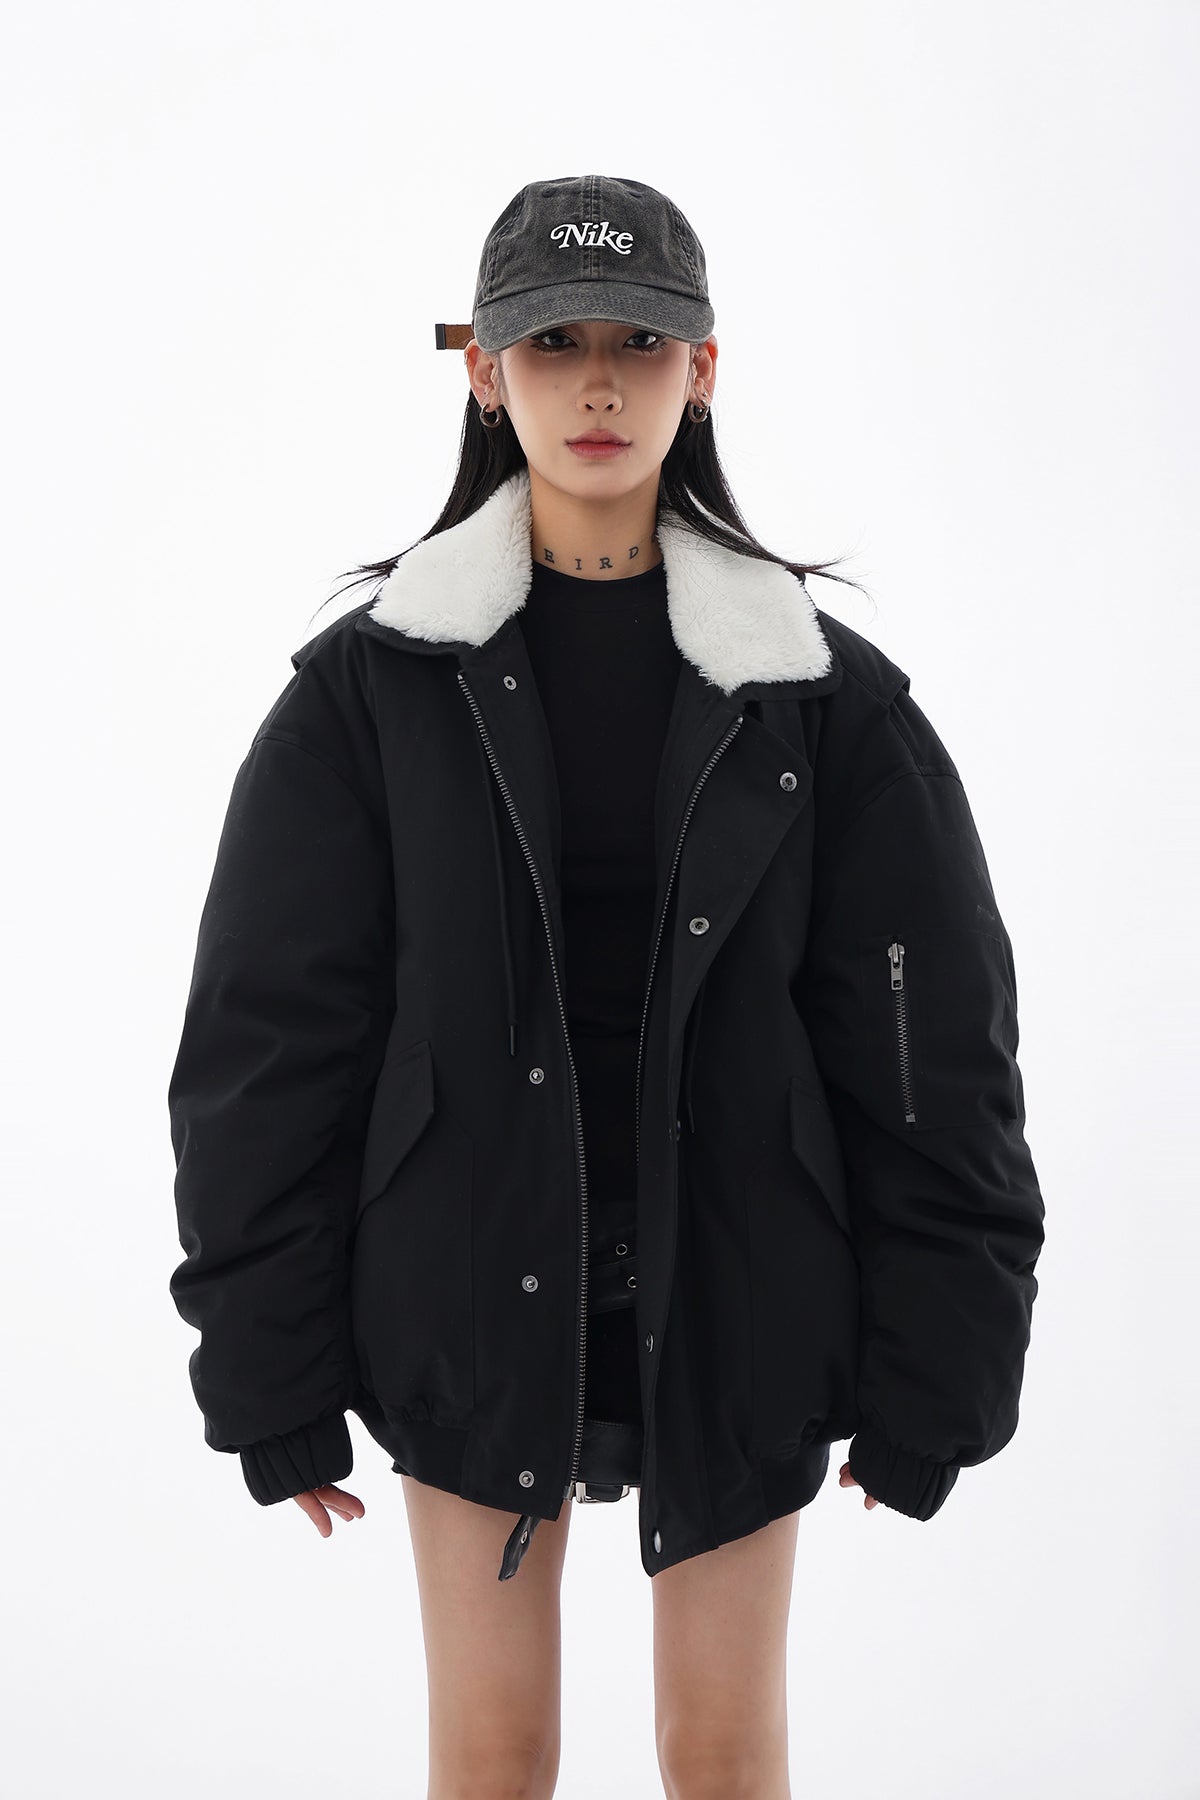 High quality black jacket outerwear AC7024